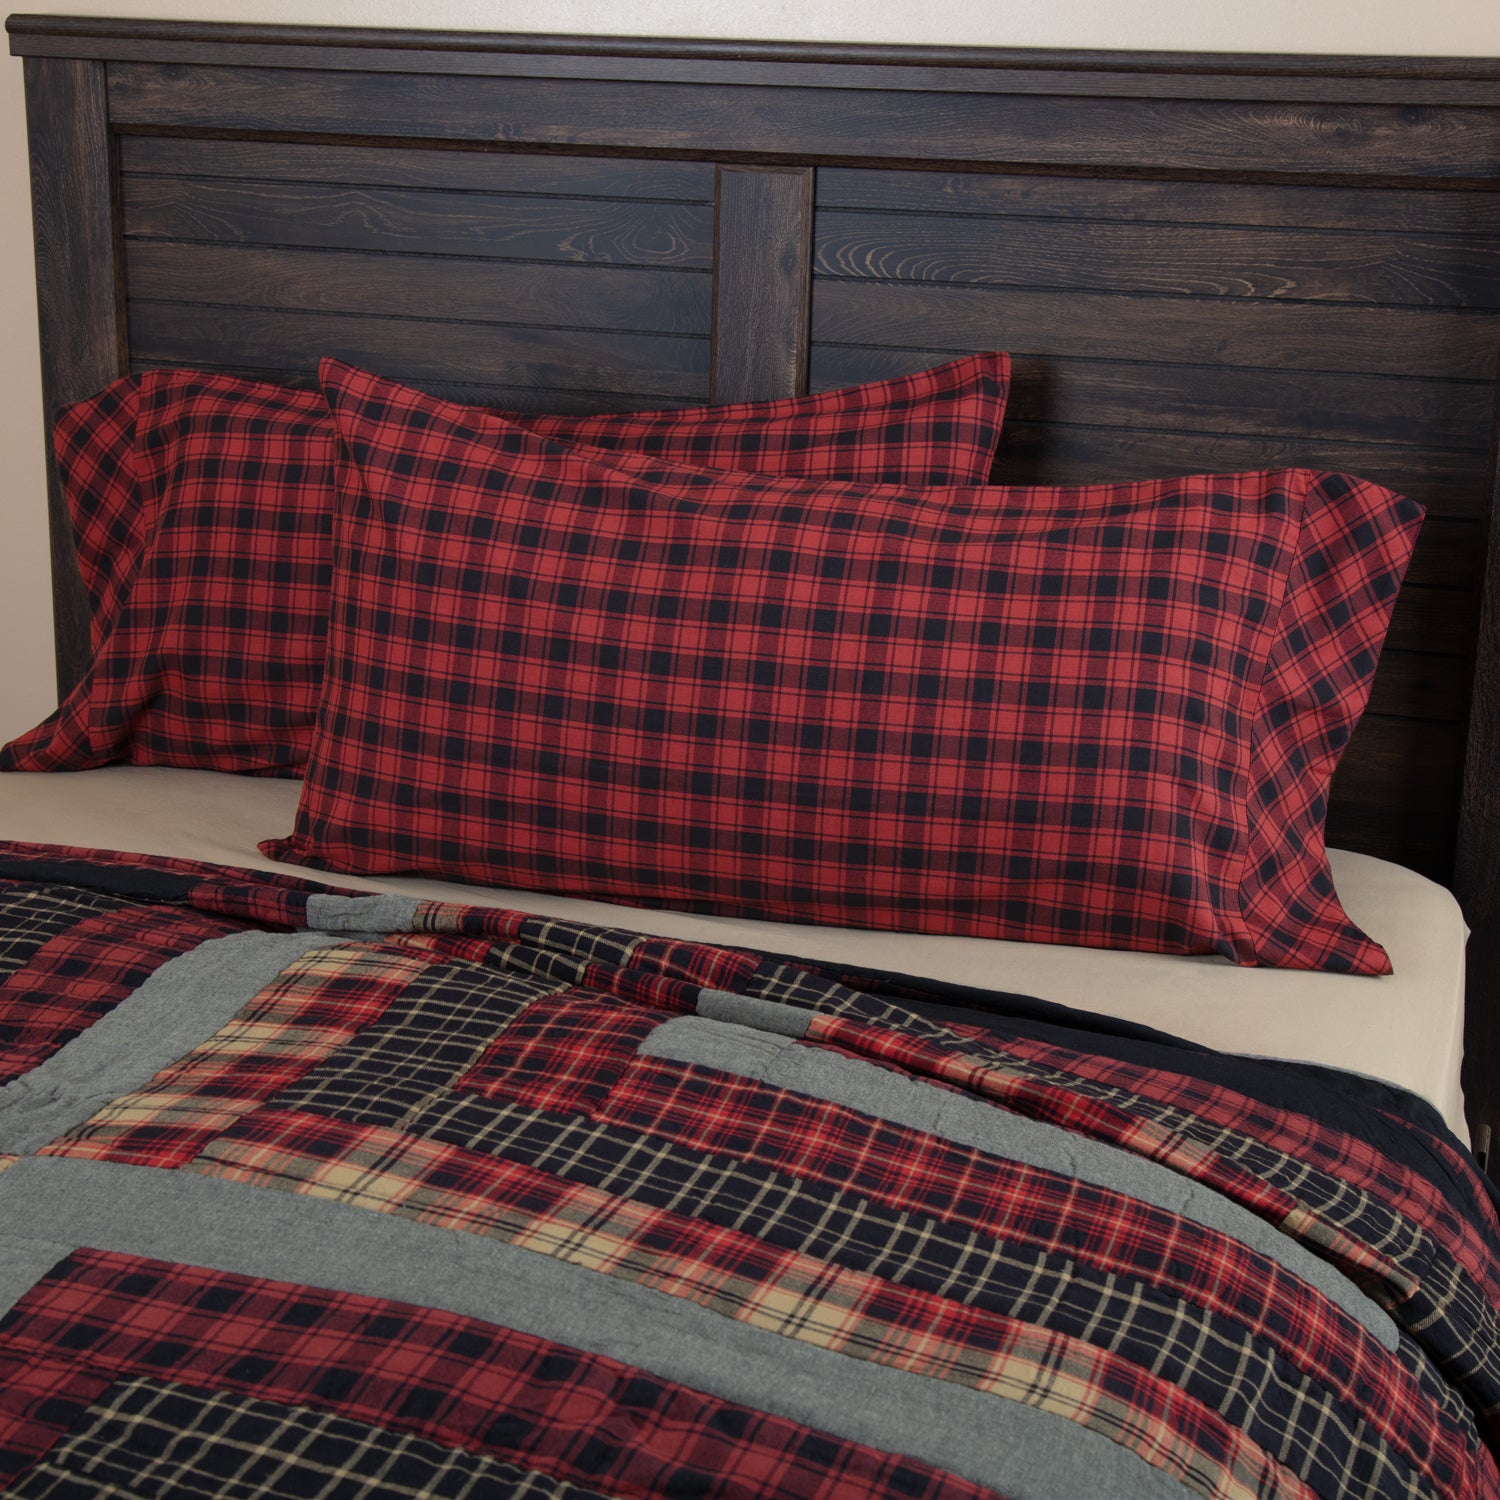 Rustic Bedding Sets: King Size Buffalo Plaid Plush Bed Set